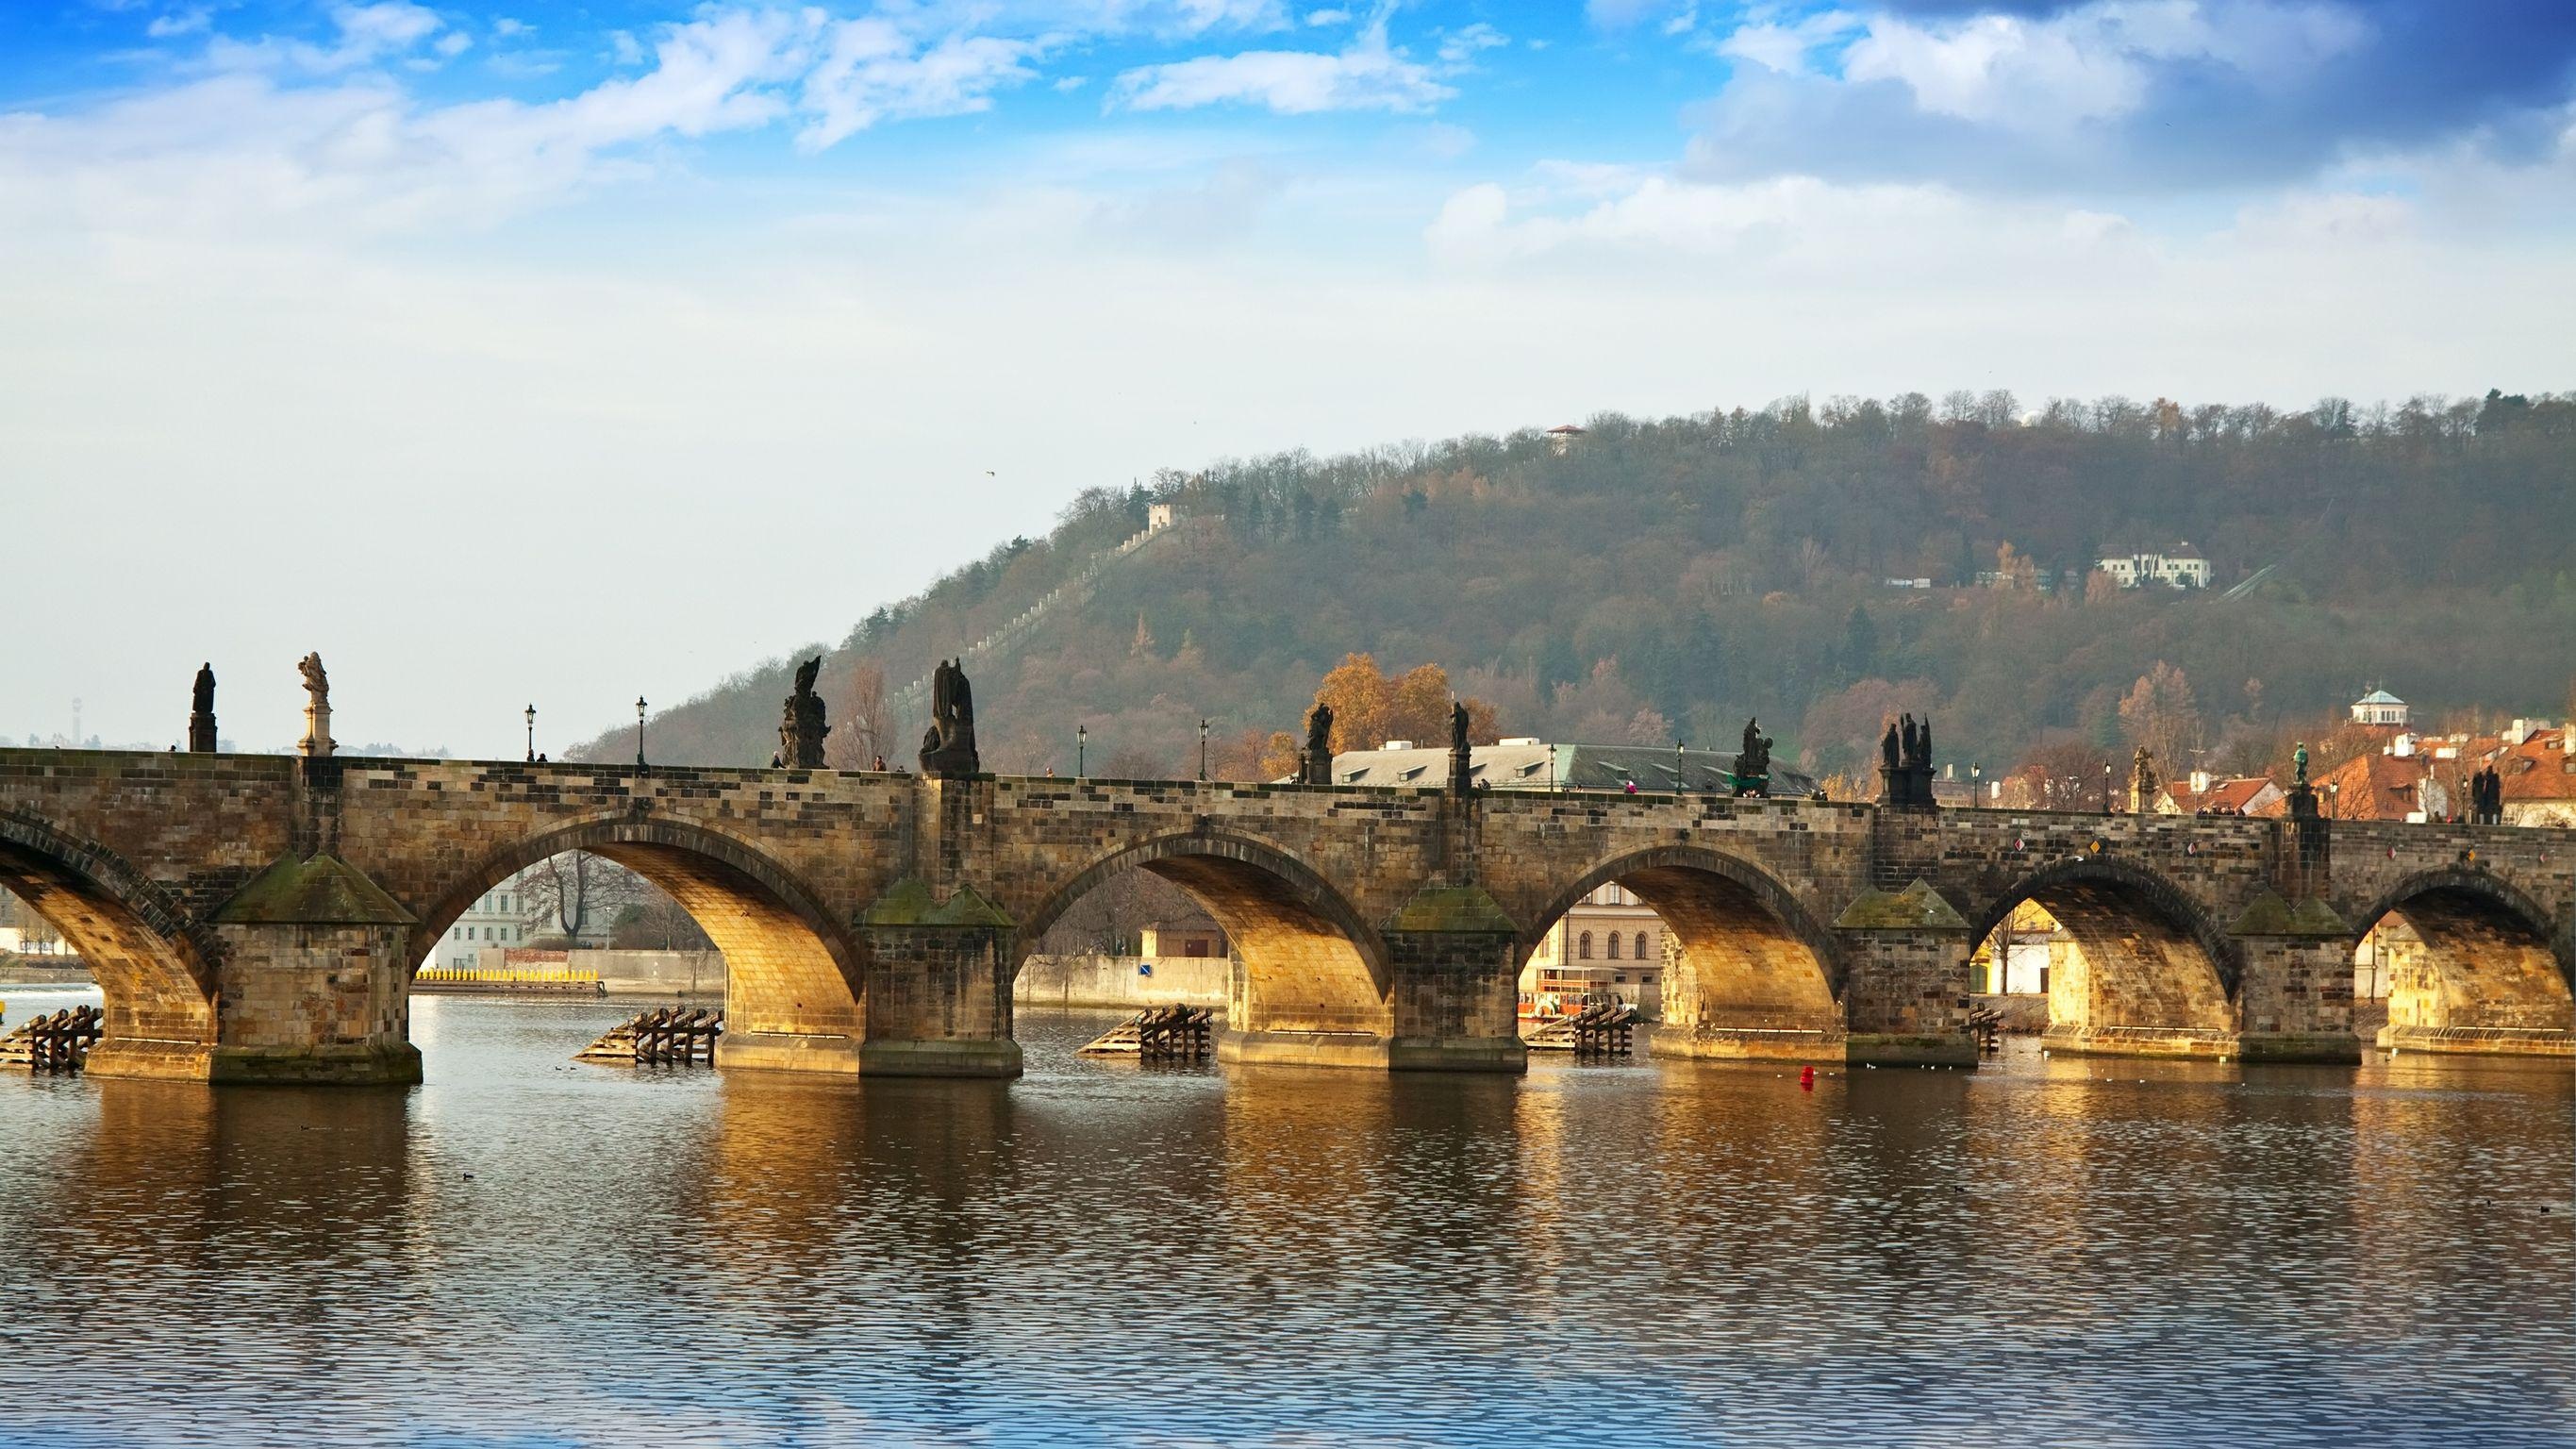 Czechia (Czech Republic): Charles Bridge, The oldest bridge still standing over the Vltava river in Prague. 2740x1540 HD Background.